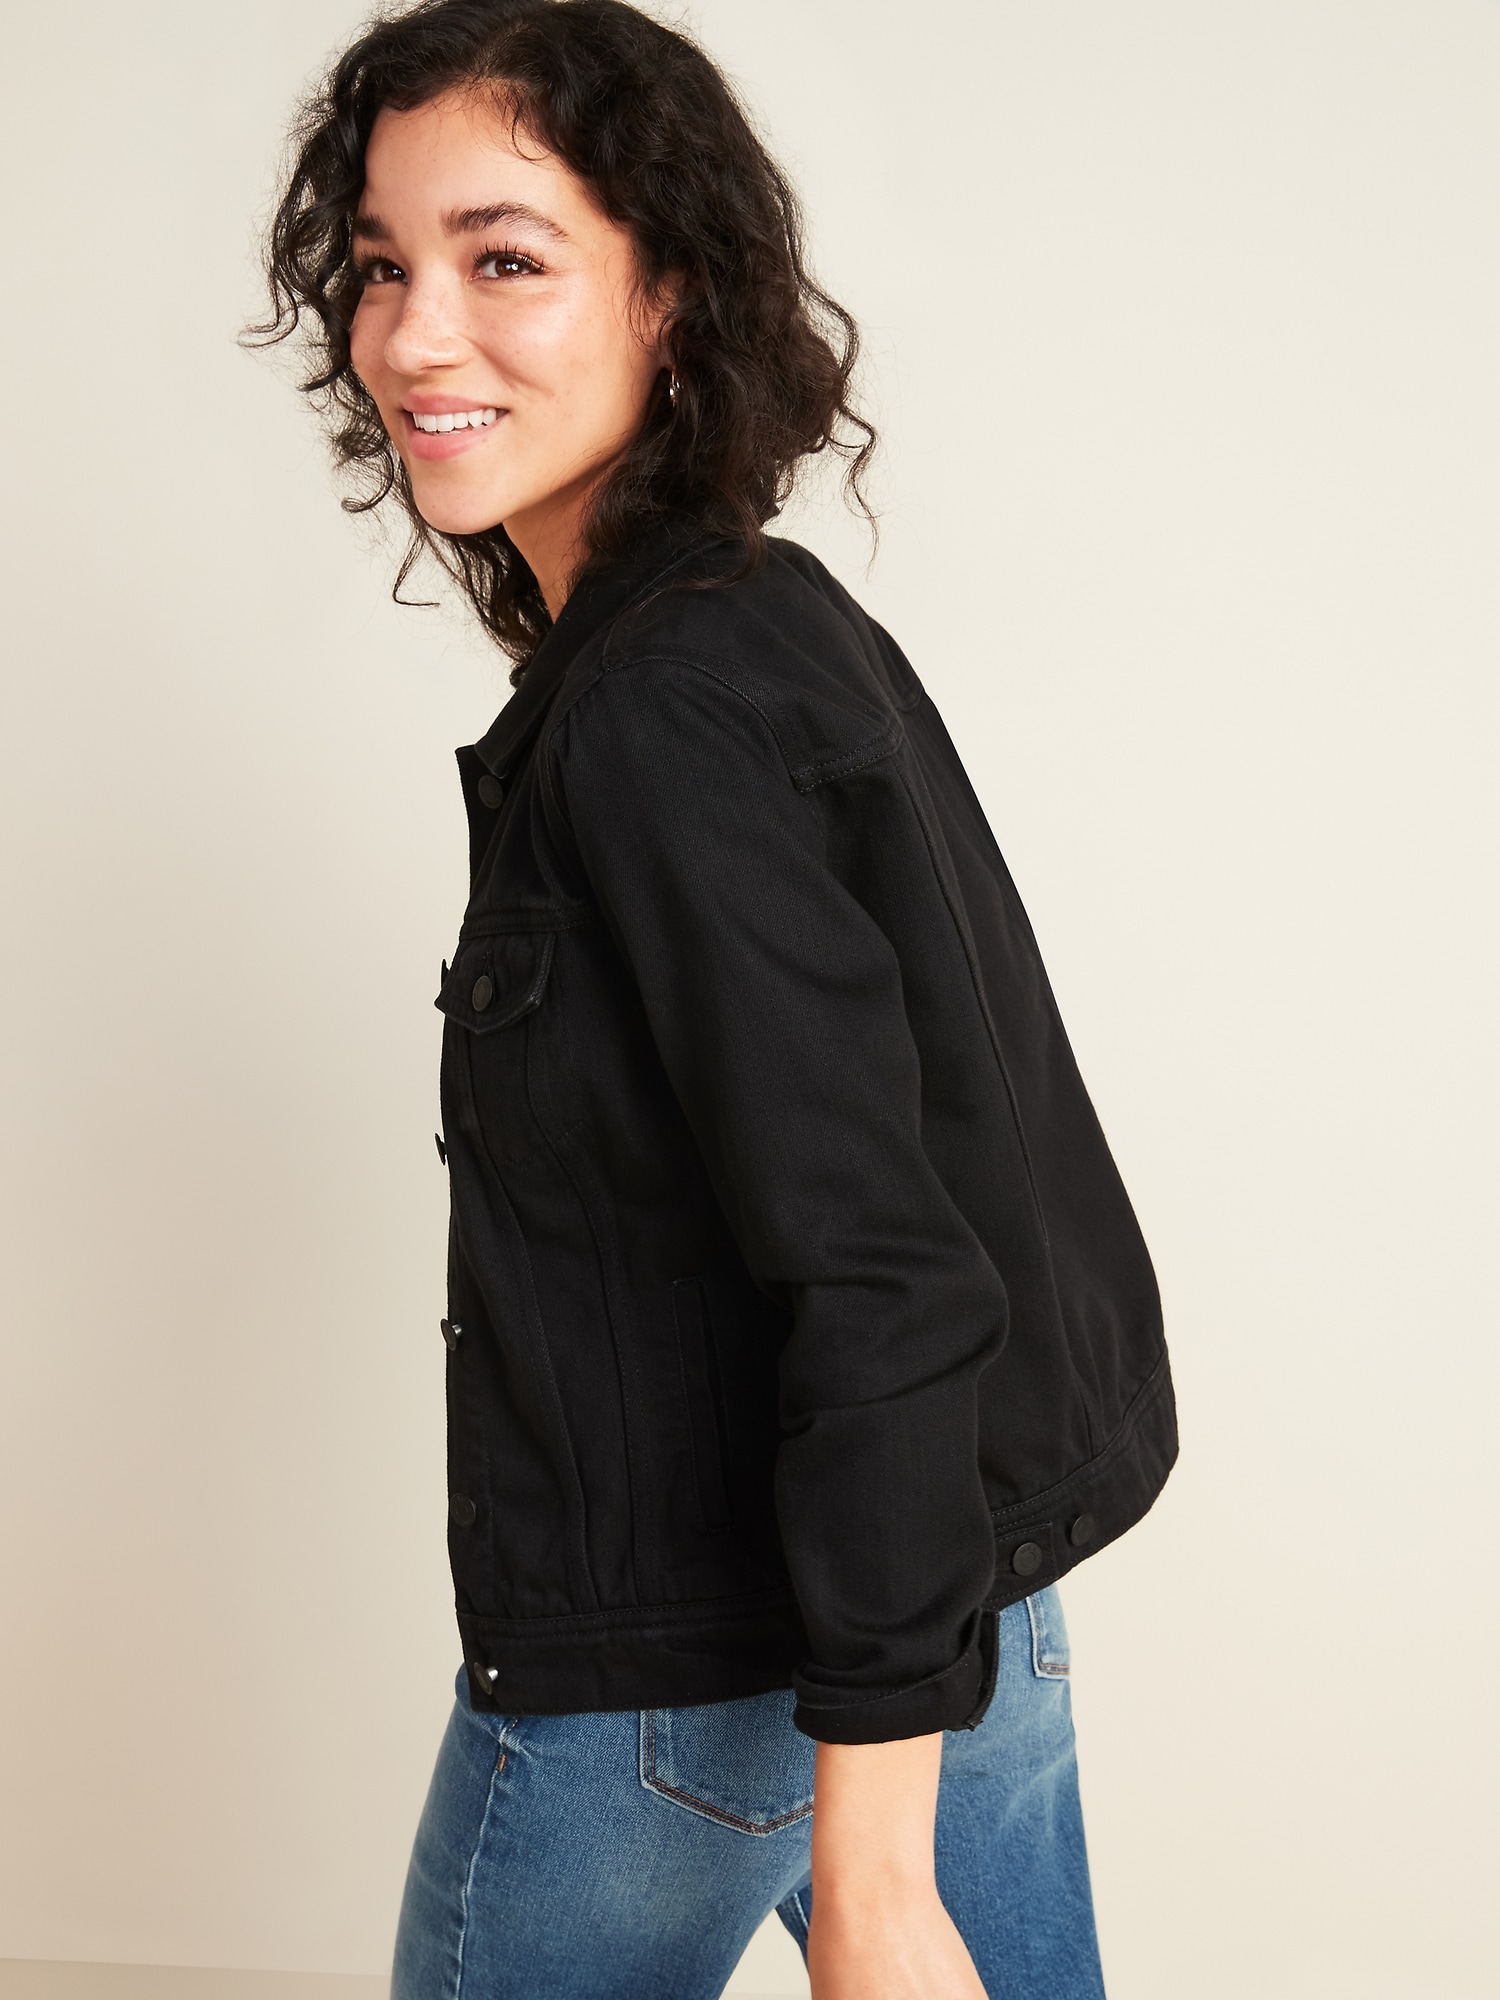 Black Jean Jacket for Women | Old Navy